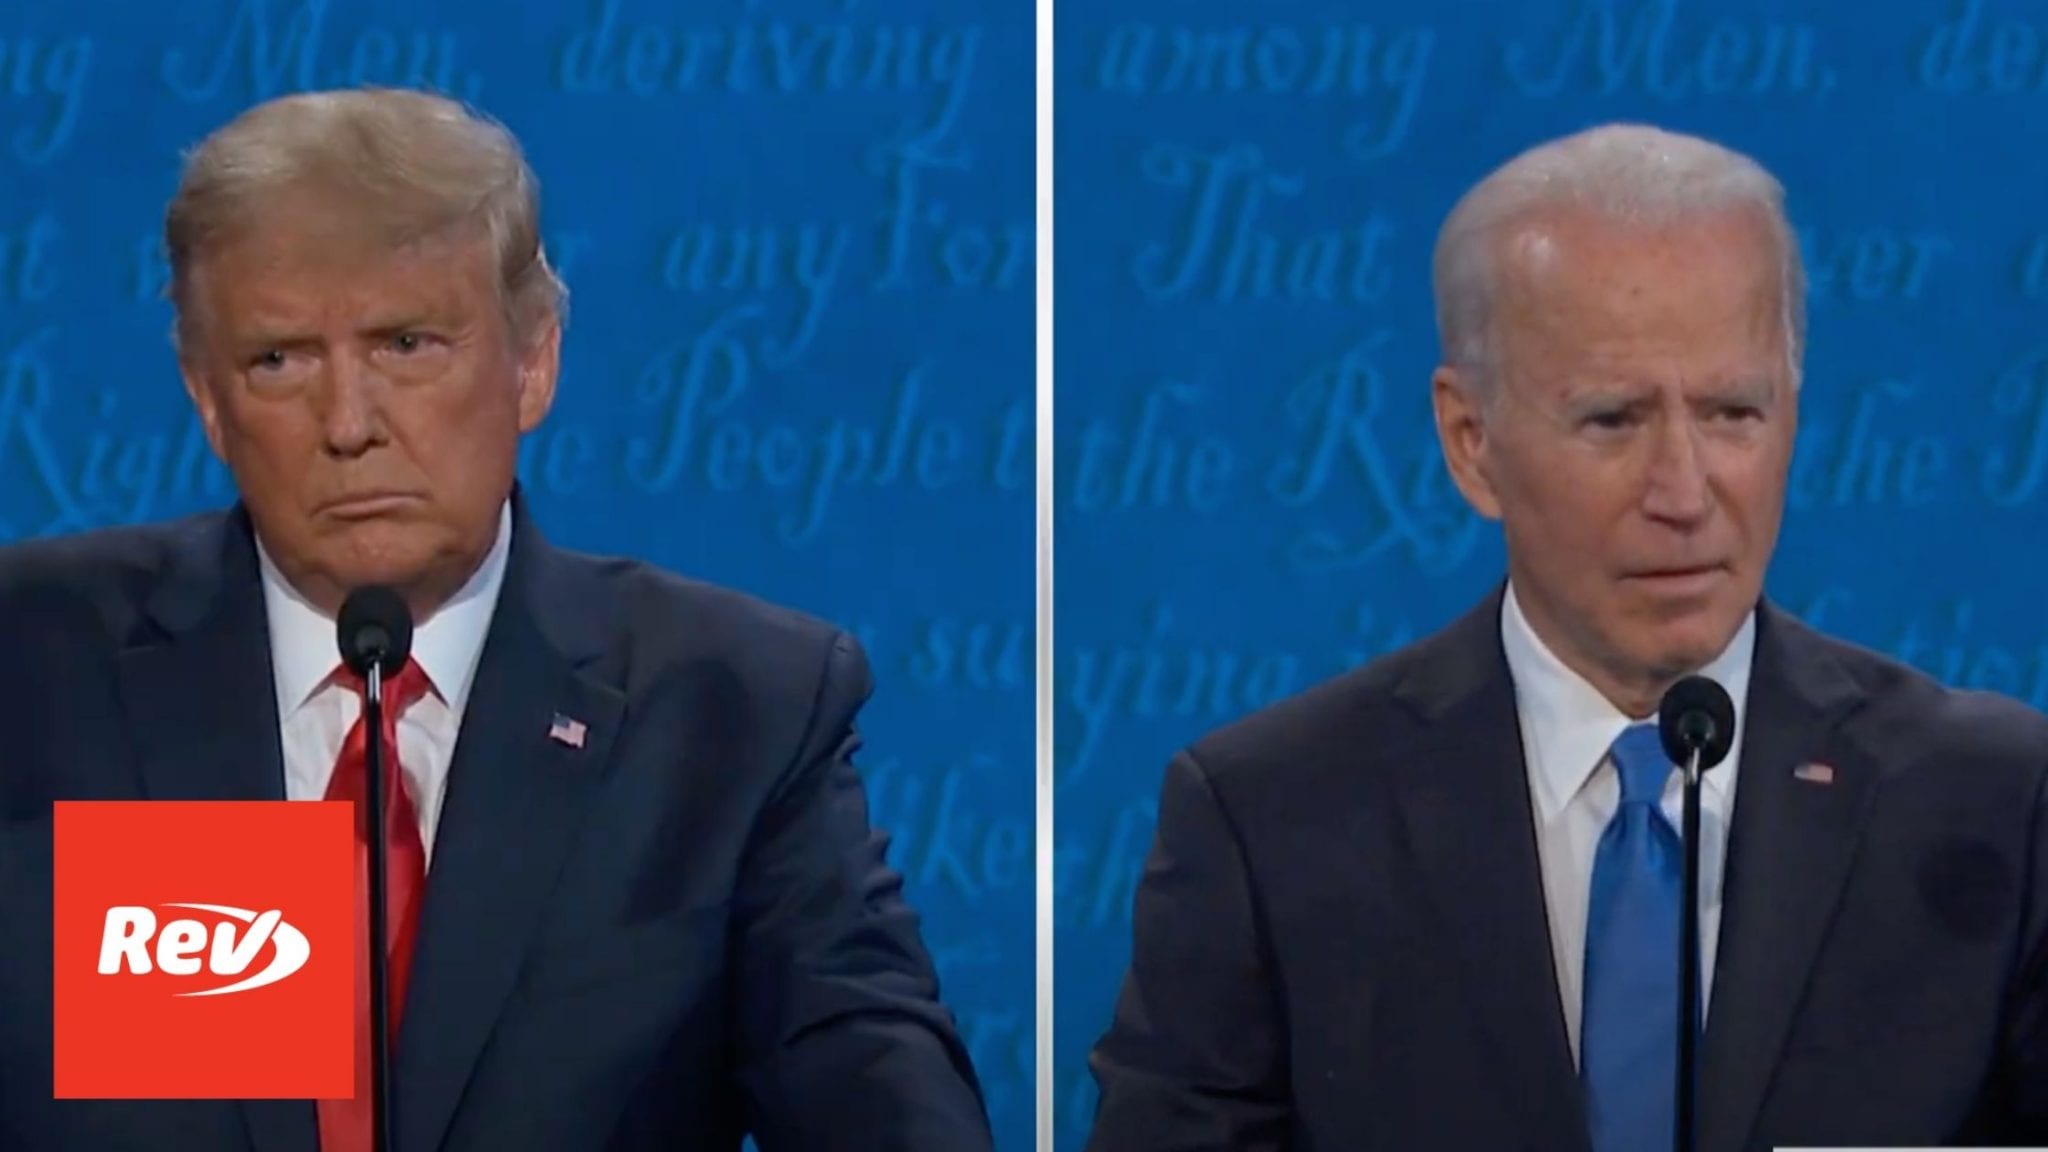 Donald Trump & Joe Biden Final Debate 2020 | Rev